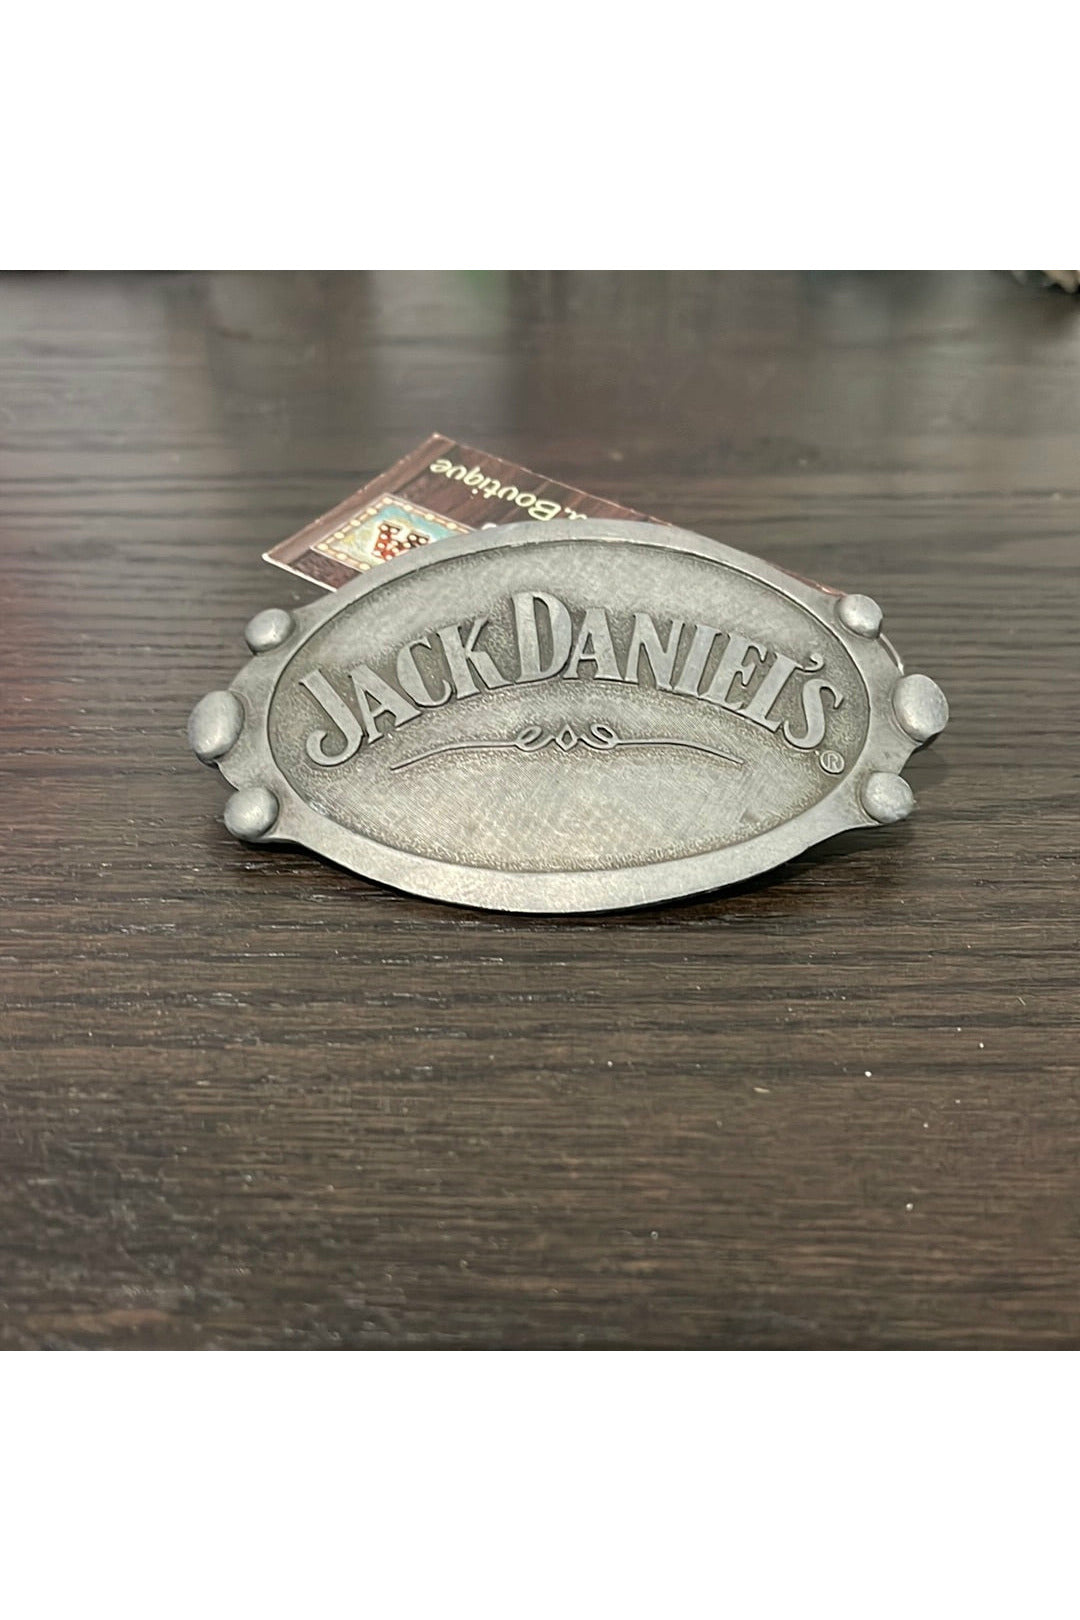 Jack Daniels buckle